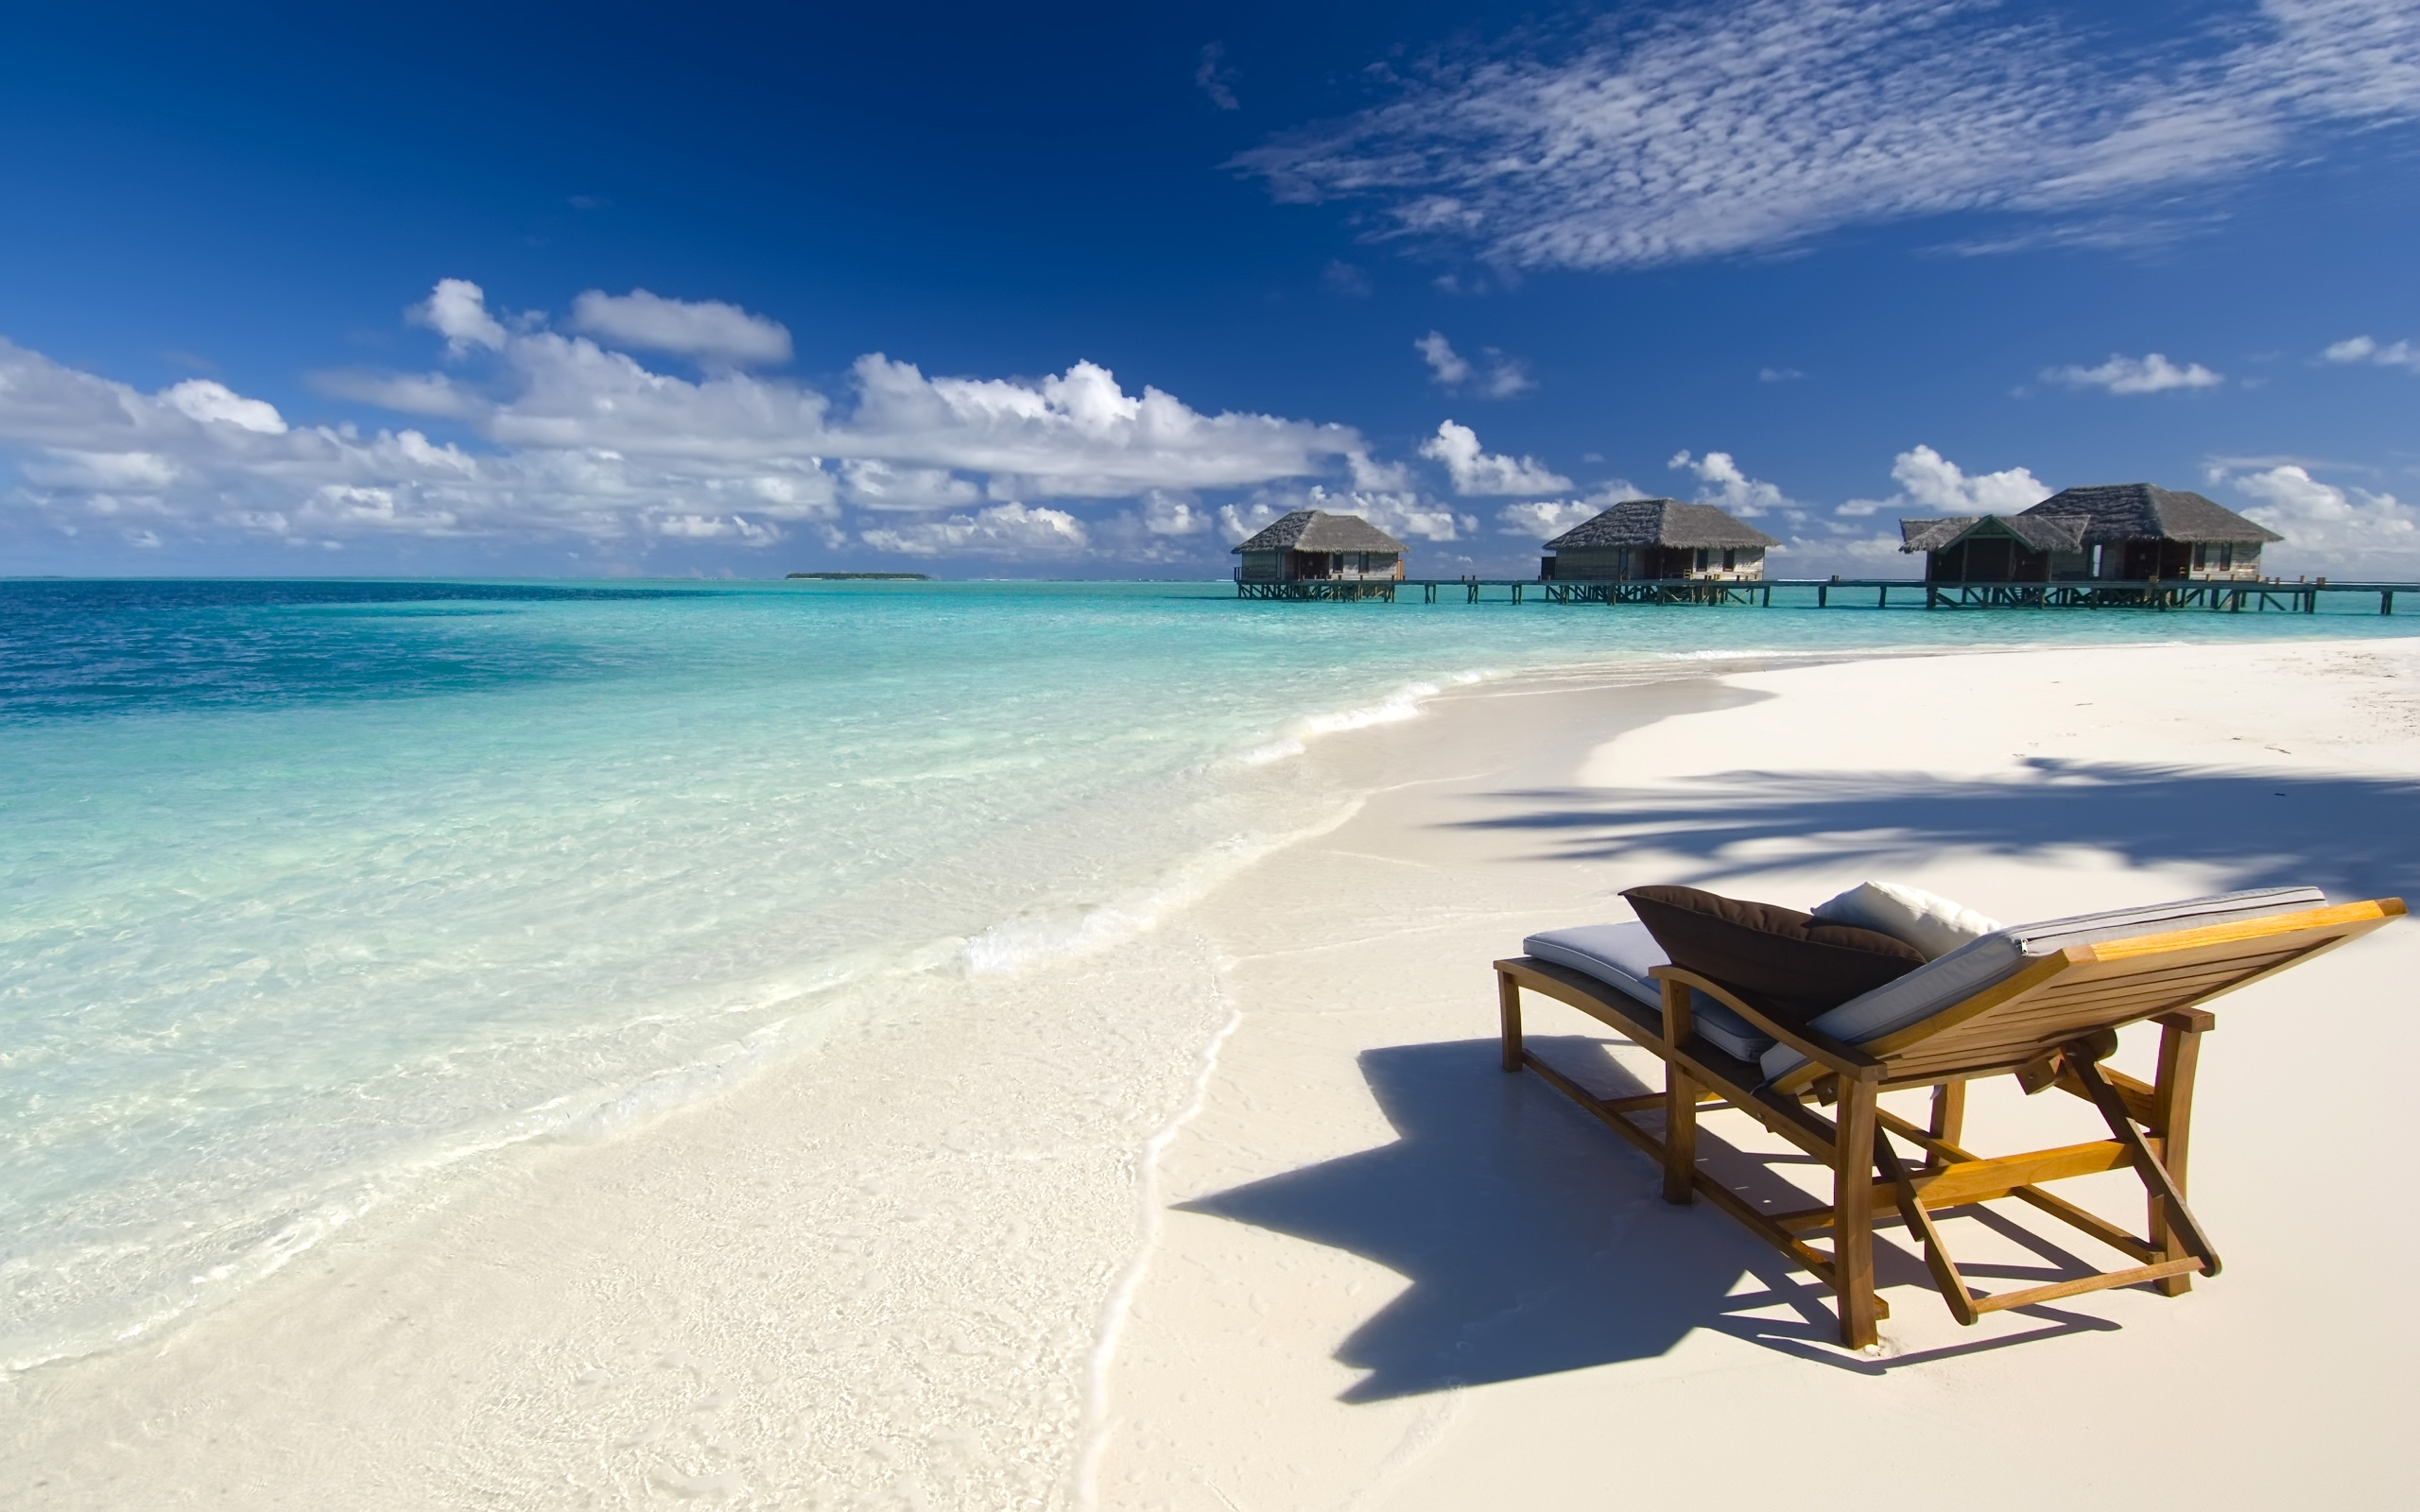 maldives, Conrad, Beach, Ocean, Sea, Seascape, Resort, Cabin, Houses, Dock, Pier, Tropical, Vacation, Chair, Waves, Sky, Clouds Wallpaper